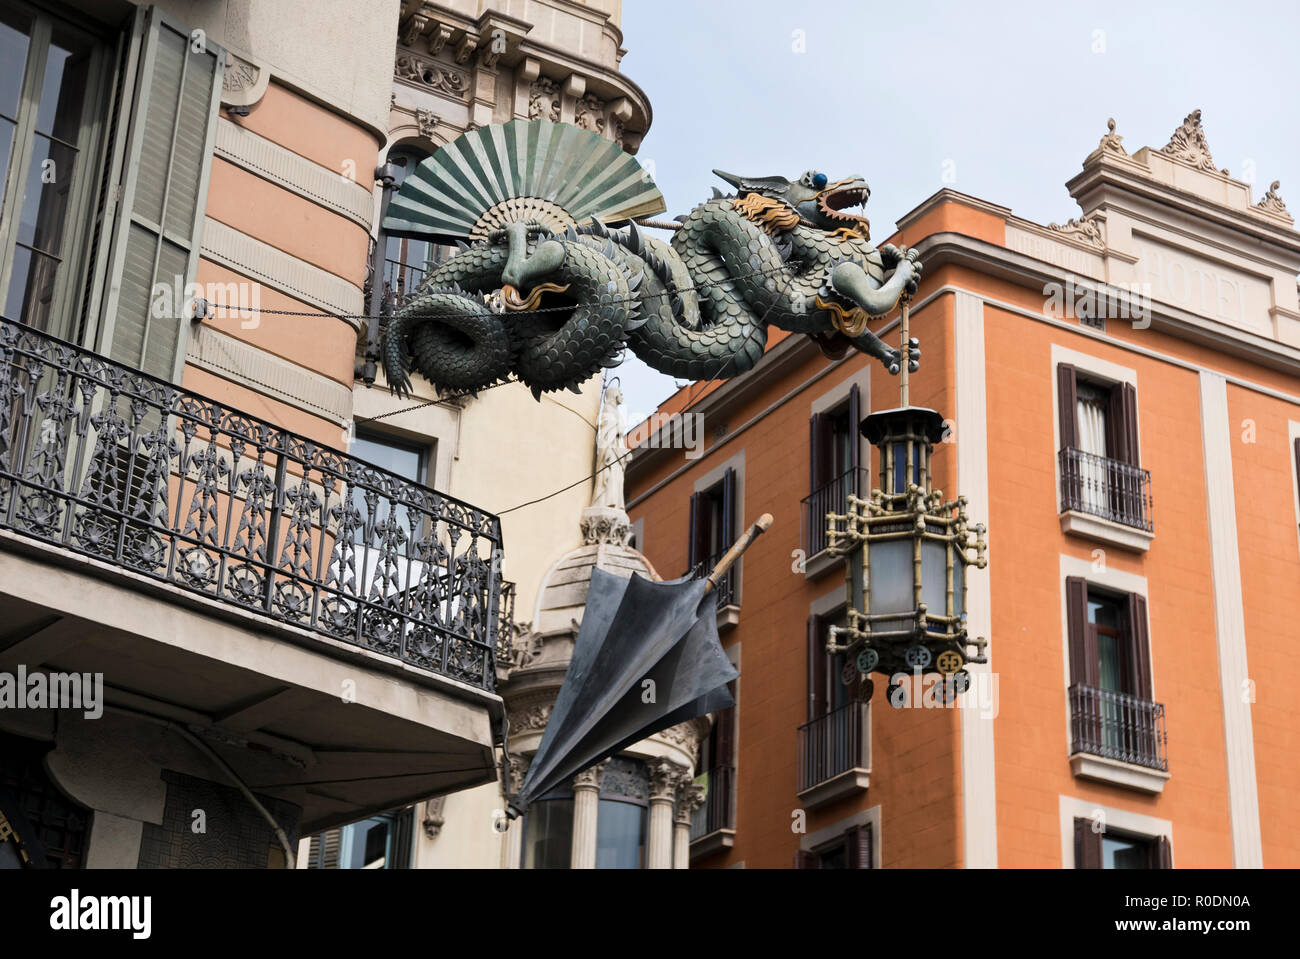 Chinese Dragon Sculpture on the Walls of Casa Bruno Cuadros building, Las Ramblas, Barcelona, Spain Stock Photo